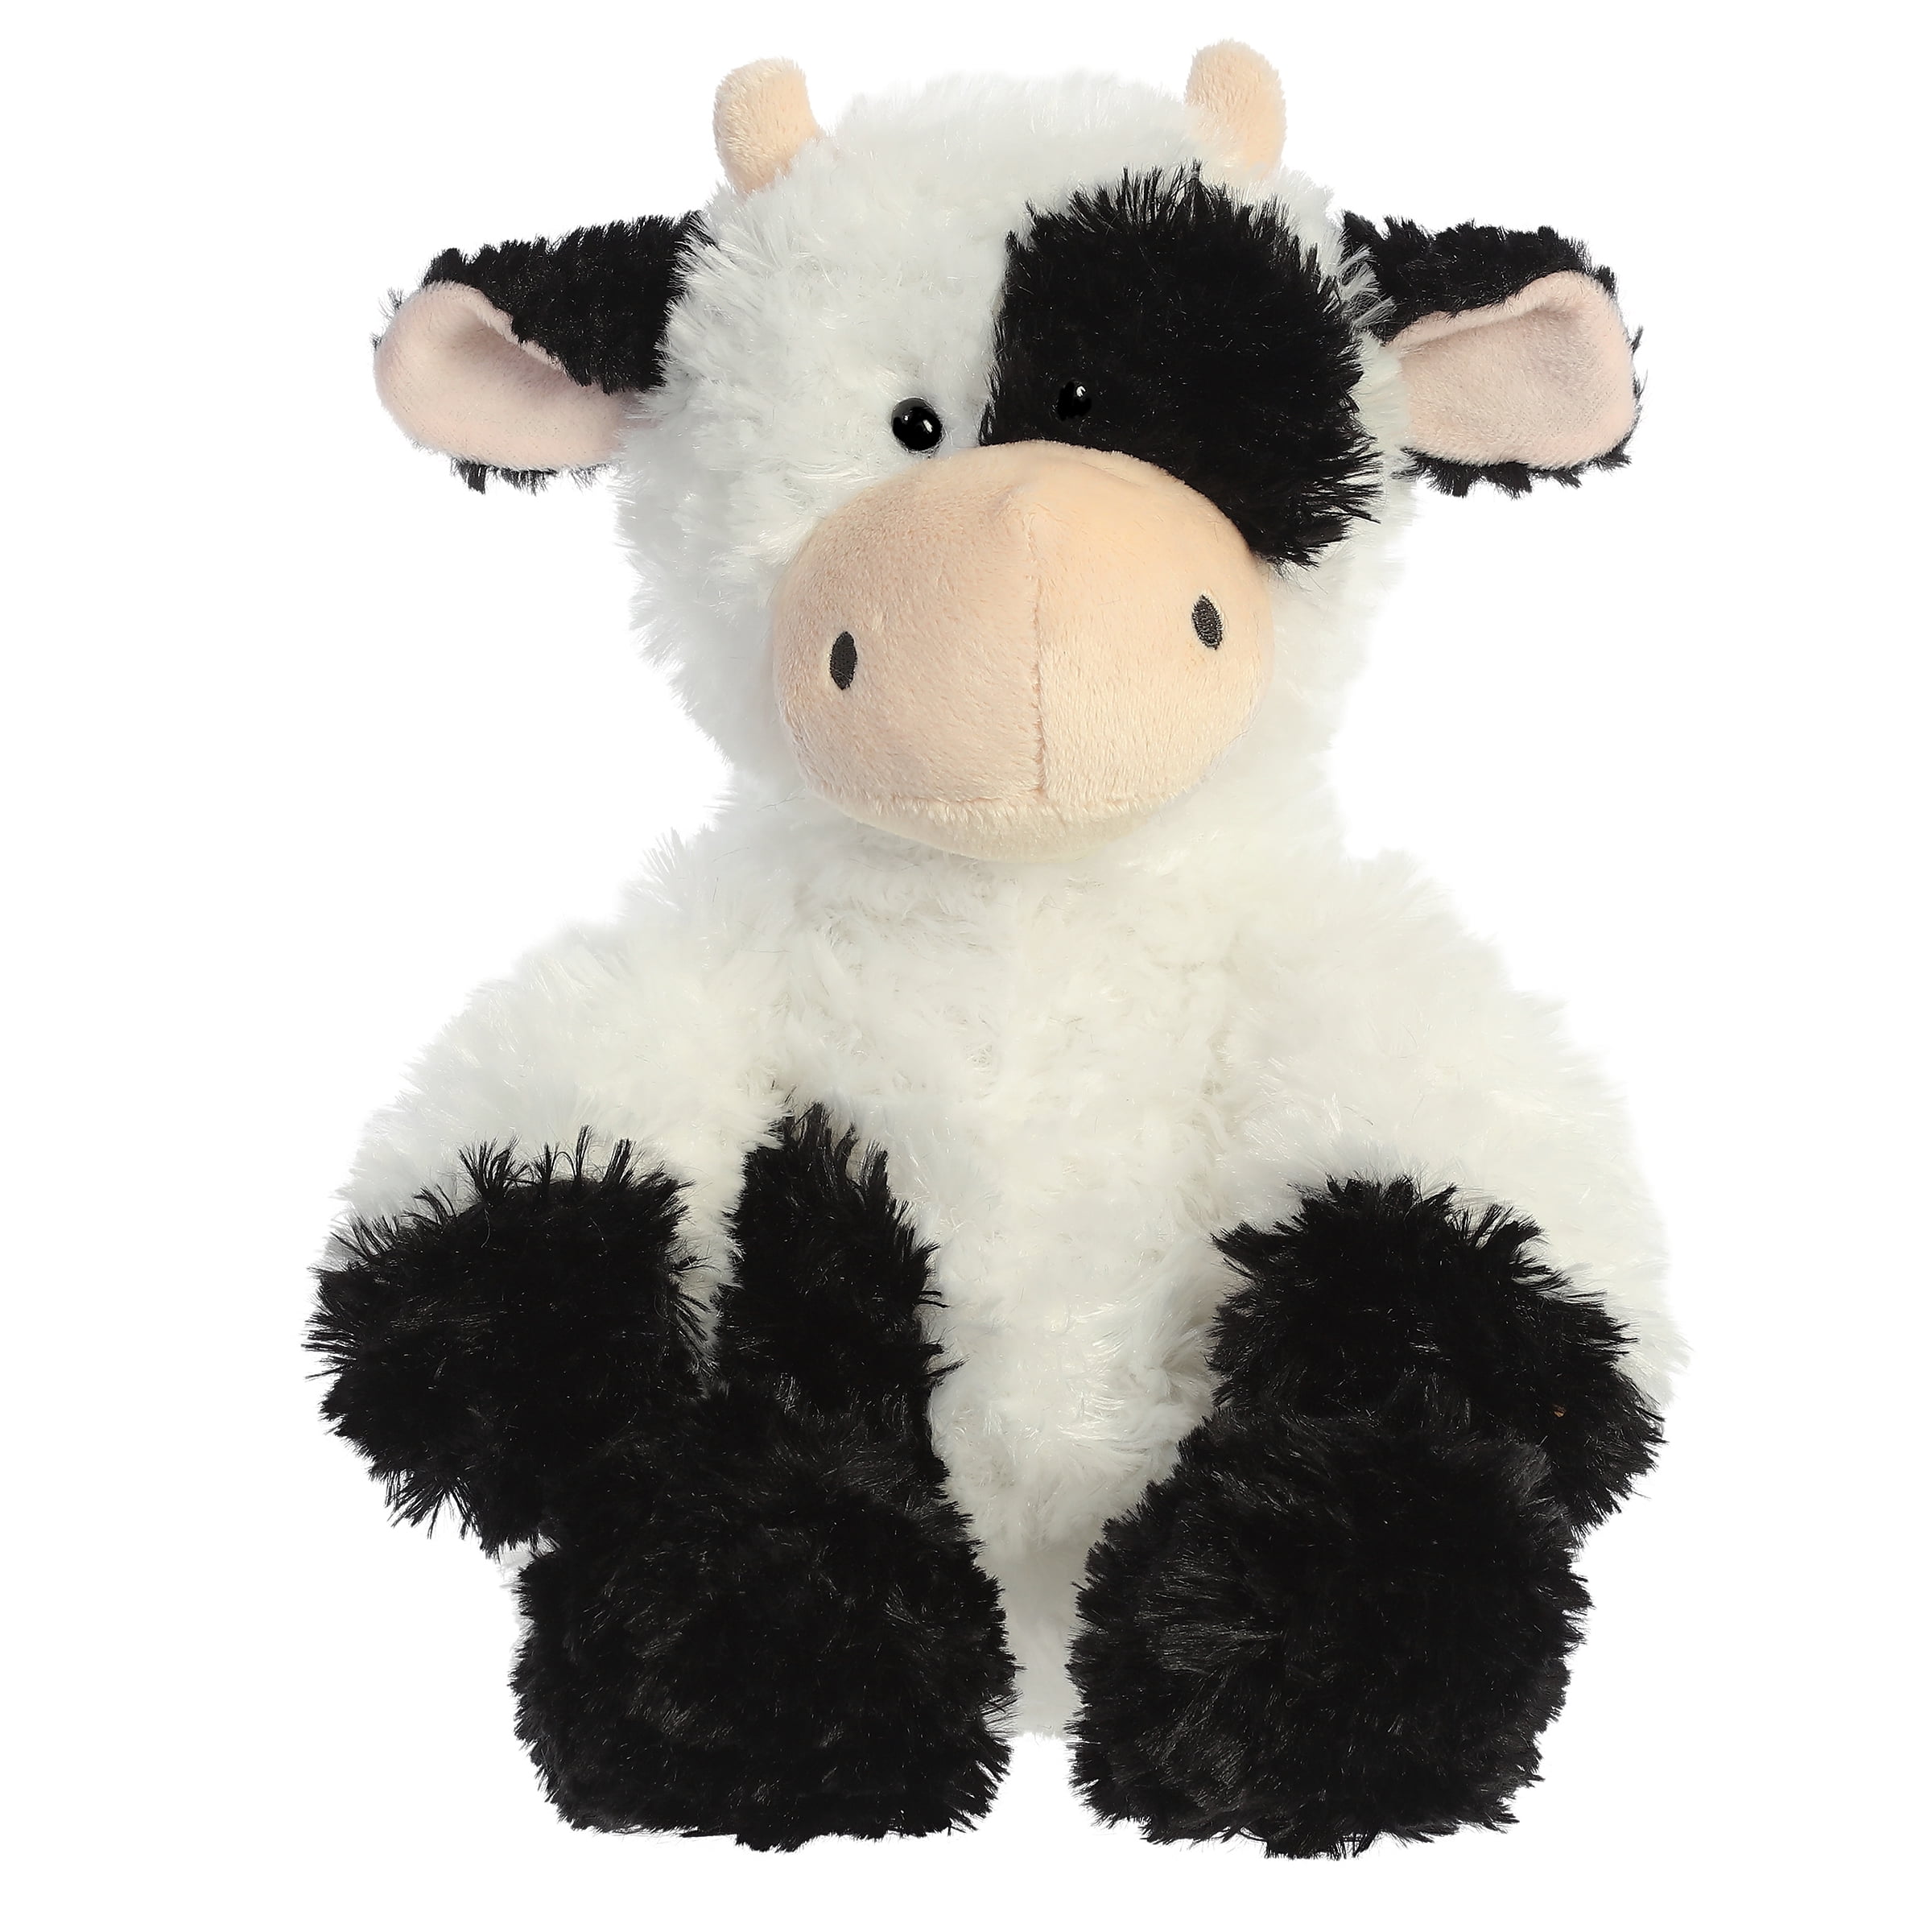 12" Flopsie Cow May Bell Aurora Stuffed Animal Fun Toy Play Plus Soft Cuddle 